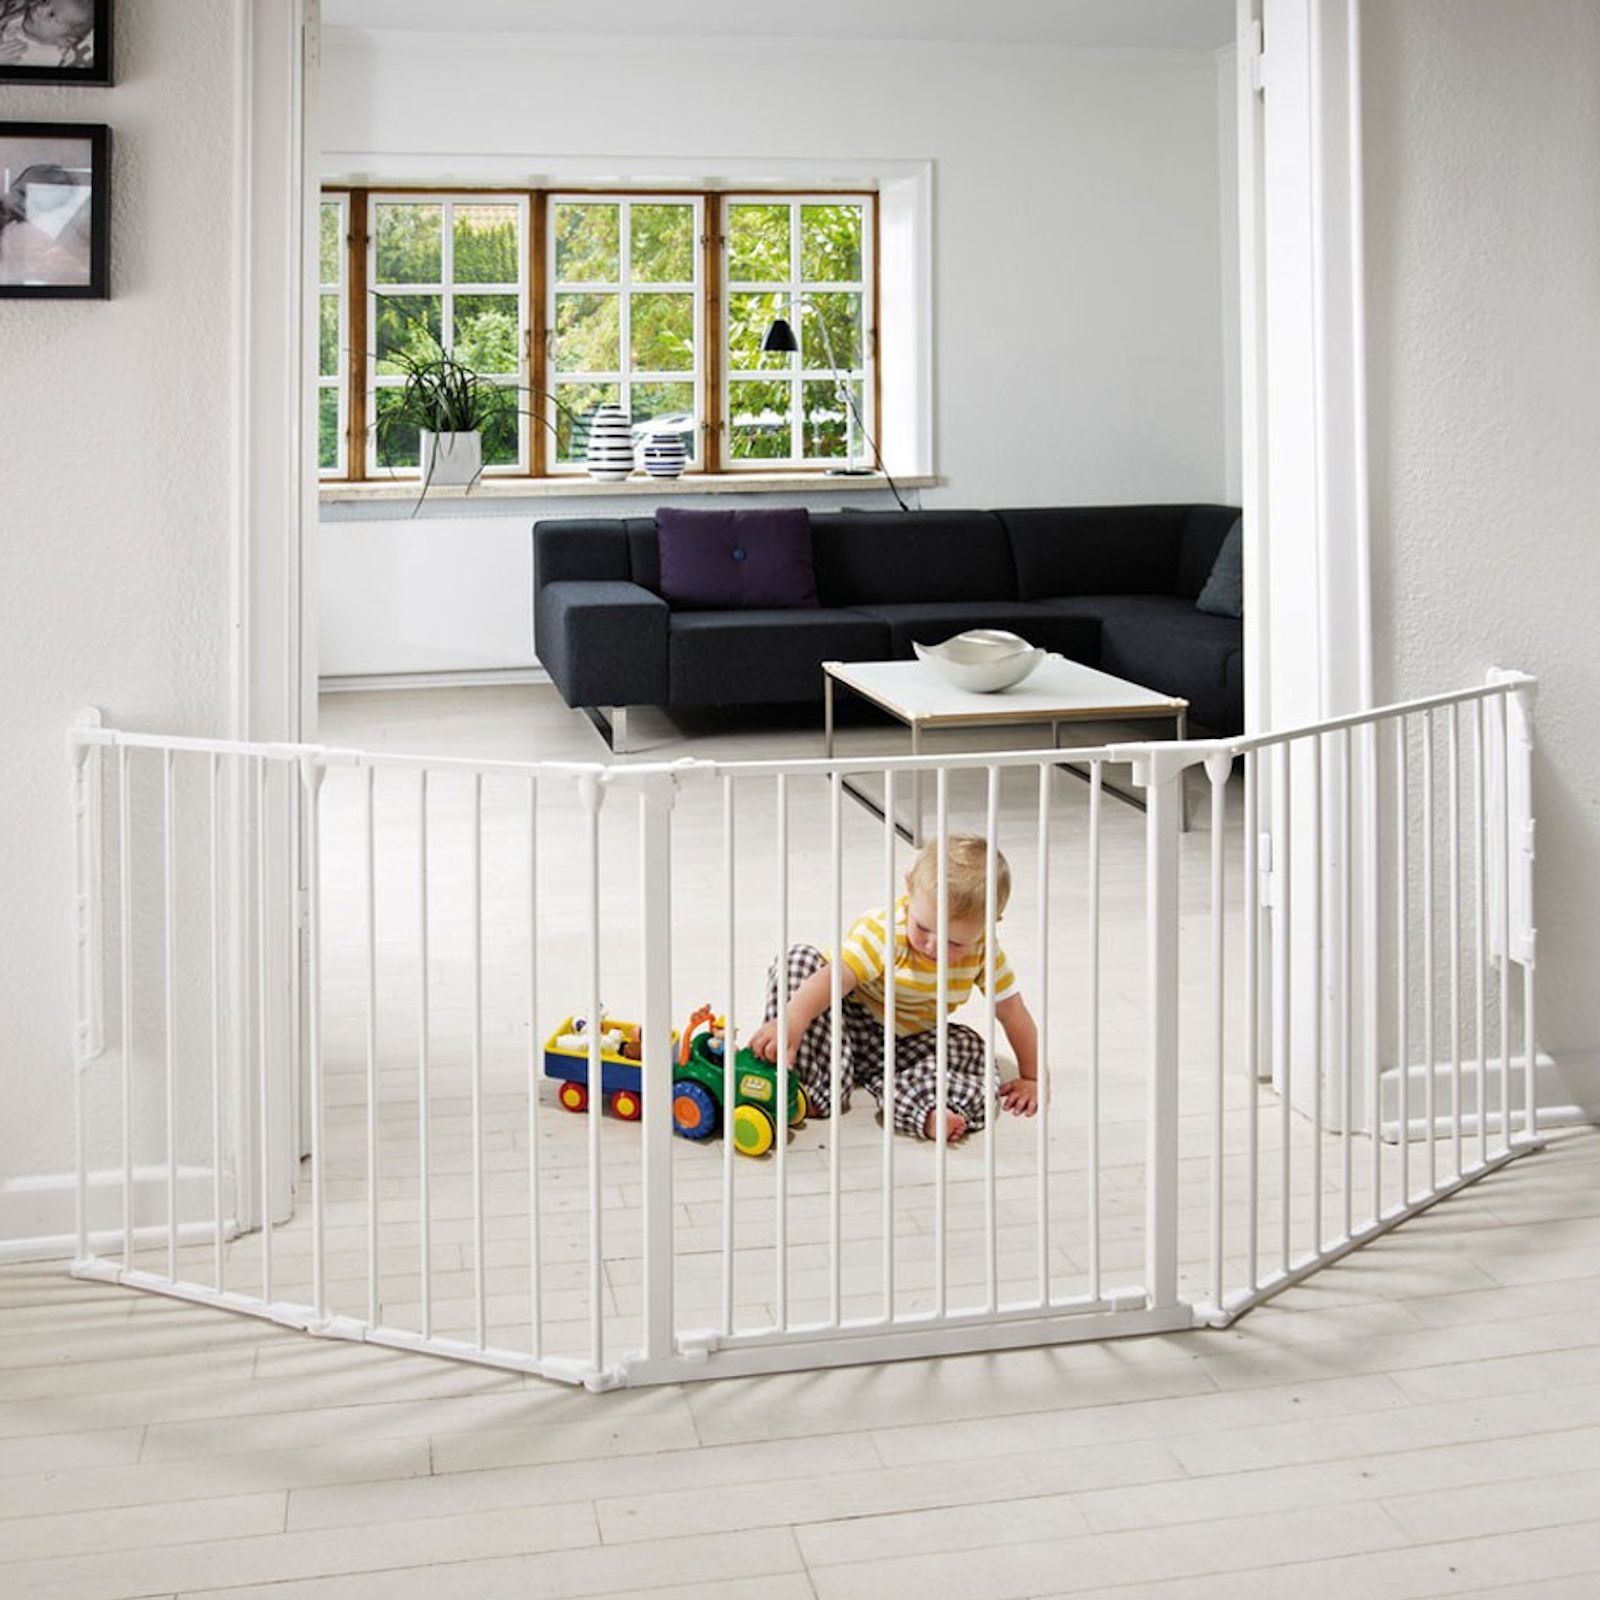 Babydan Large Configure Baby Safety Gate - White (90 - 223cm)